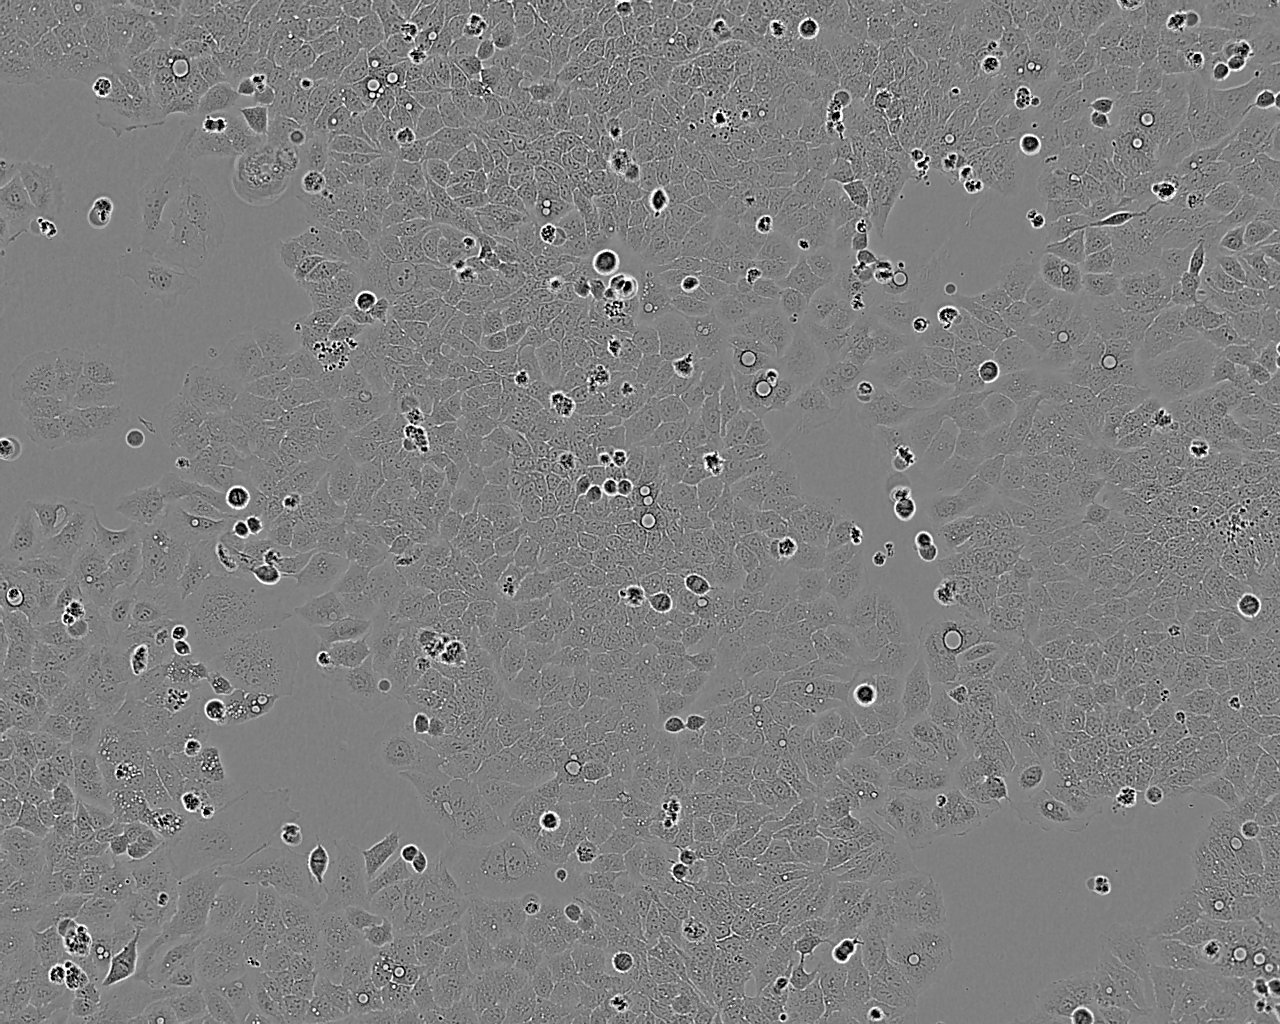 BPH-1 epithelioid cells人前列腺增生细胞系,BPH-1 epithelioid cells